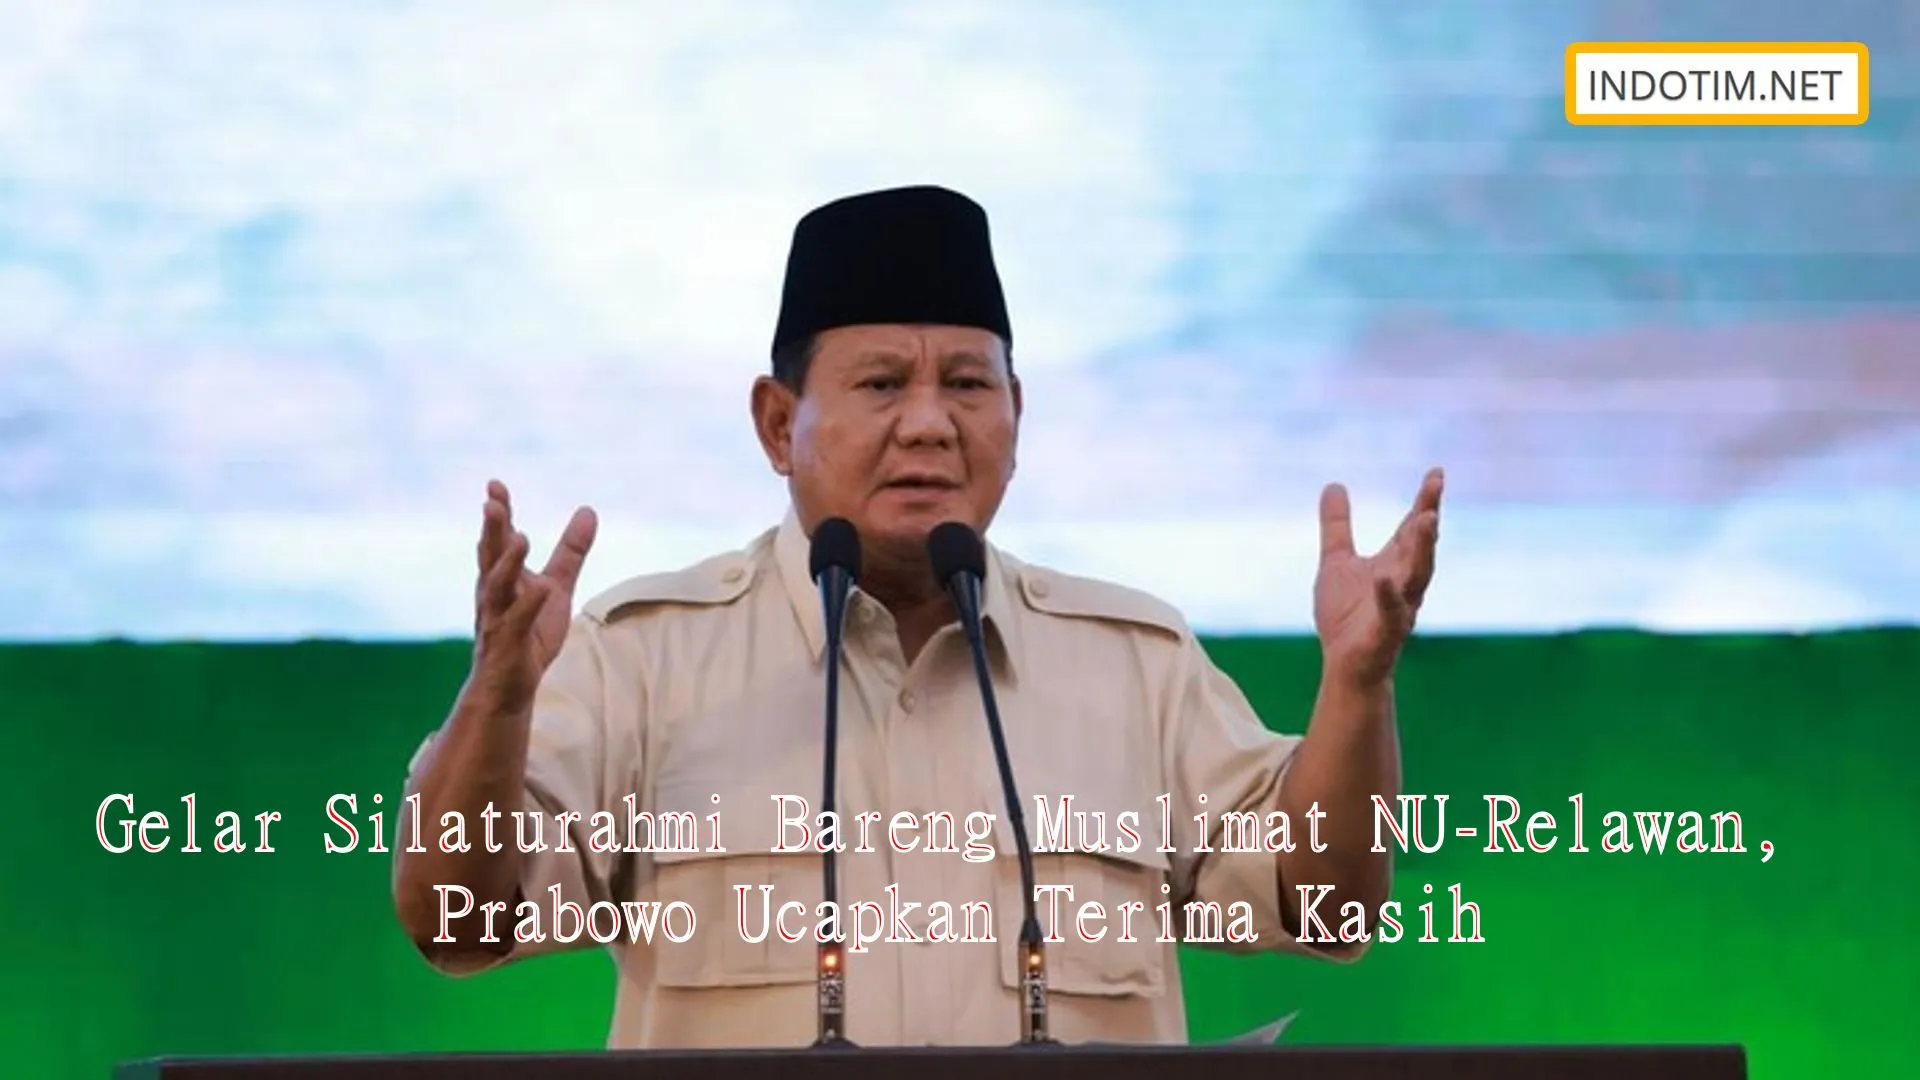 Gelar Silaturahmi Bareng Muslimat NU-Relawan, Prabowo Ucapkan Terima Kasih